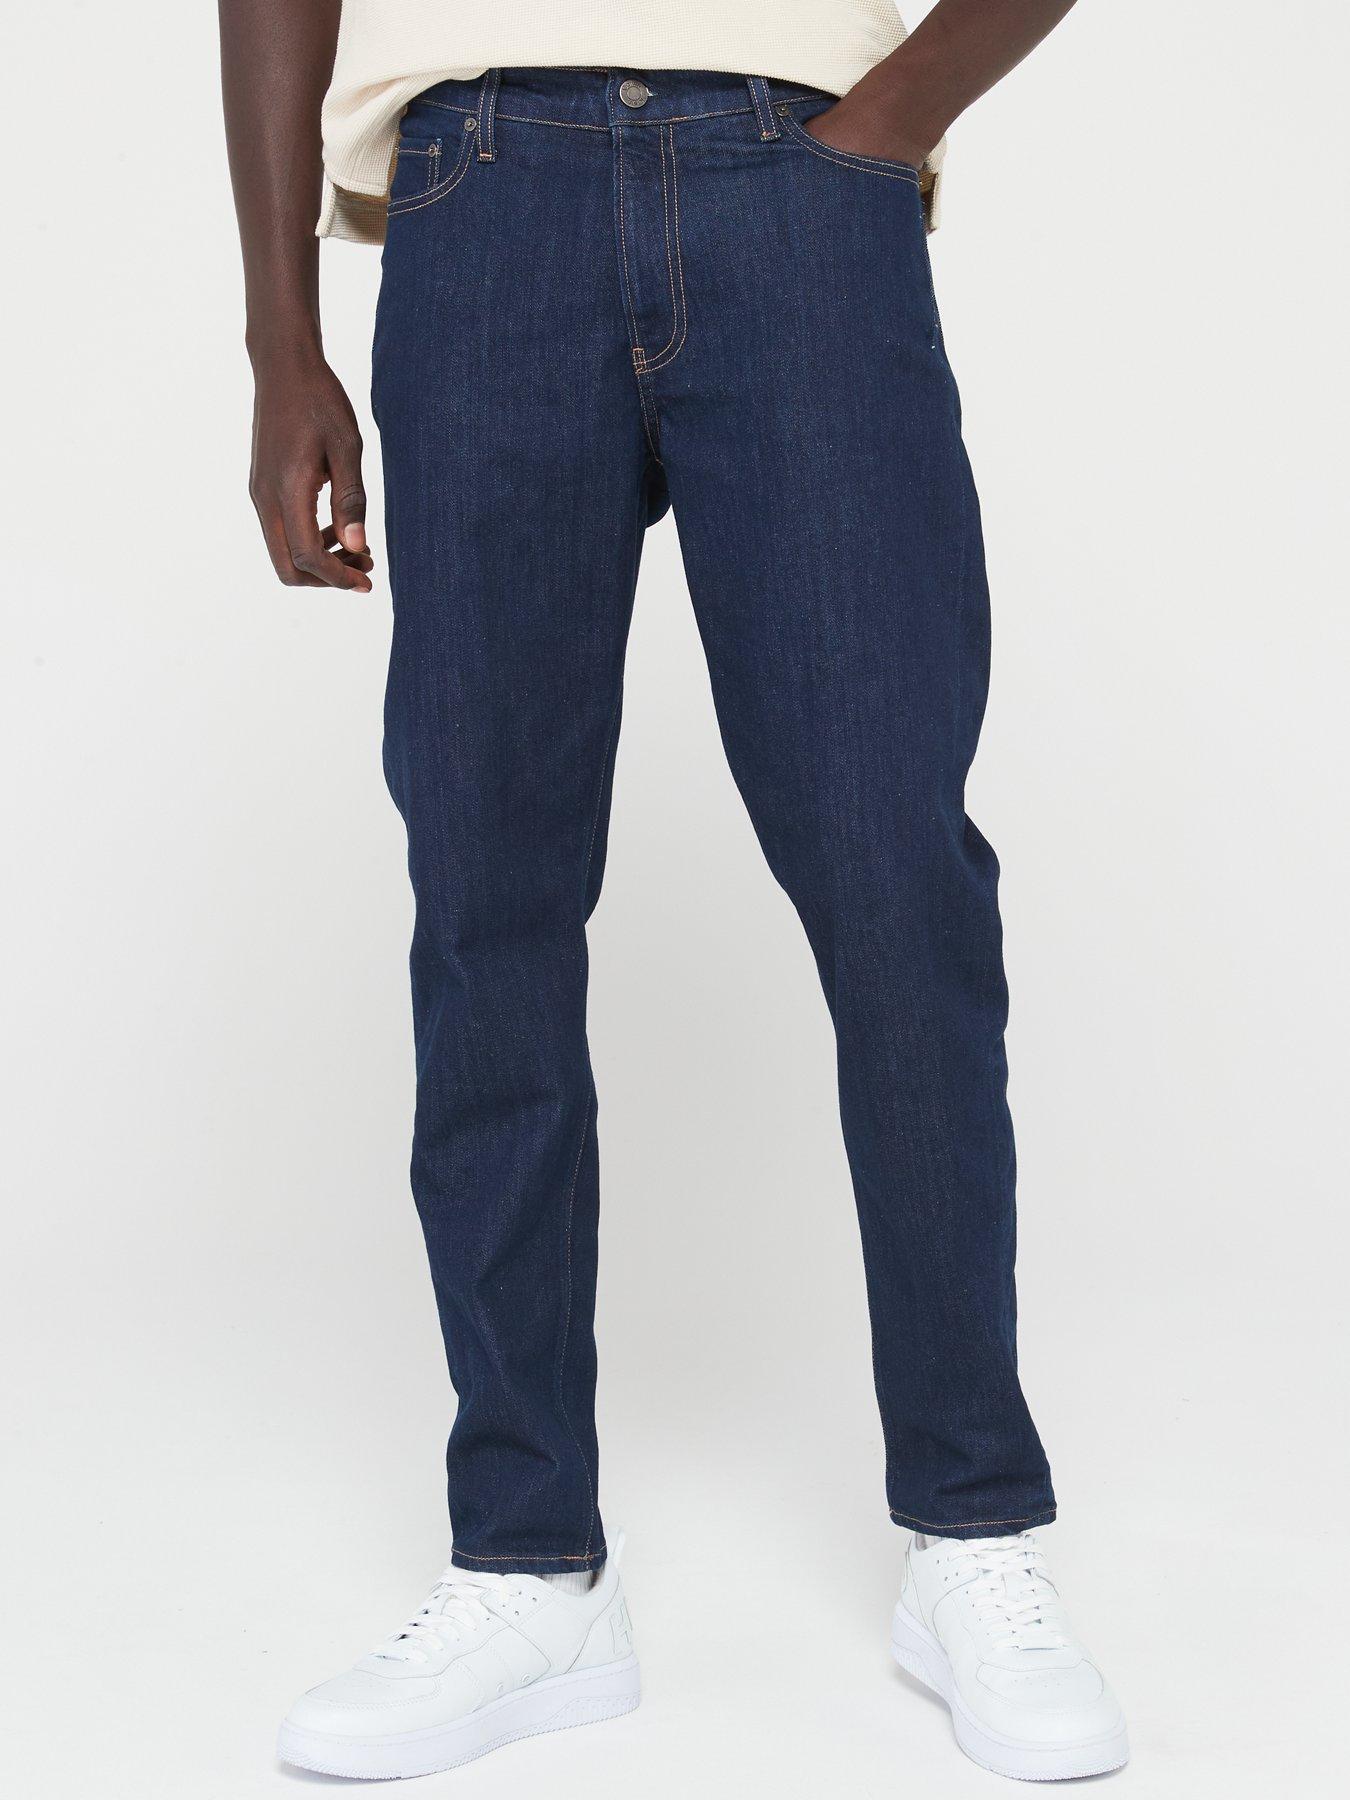 Calvin Klein Jeans Skinny Fit Jeans In Dark Wash-Blue for Men